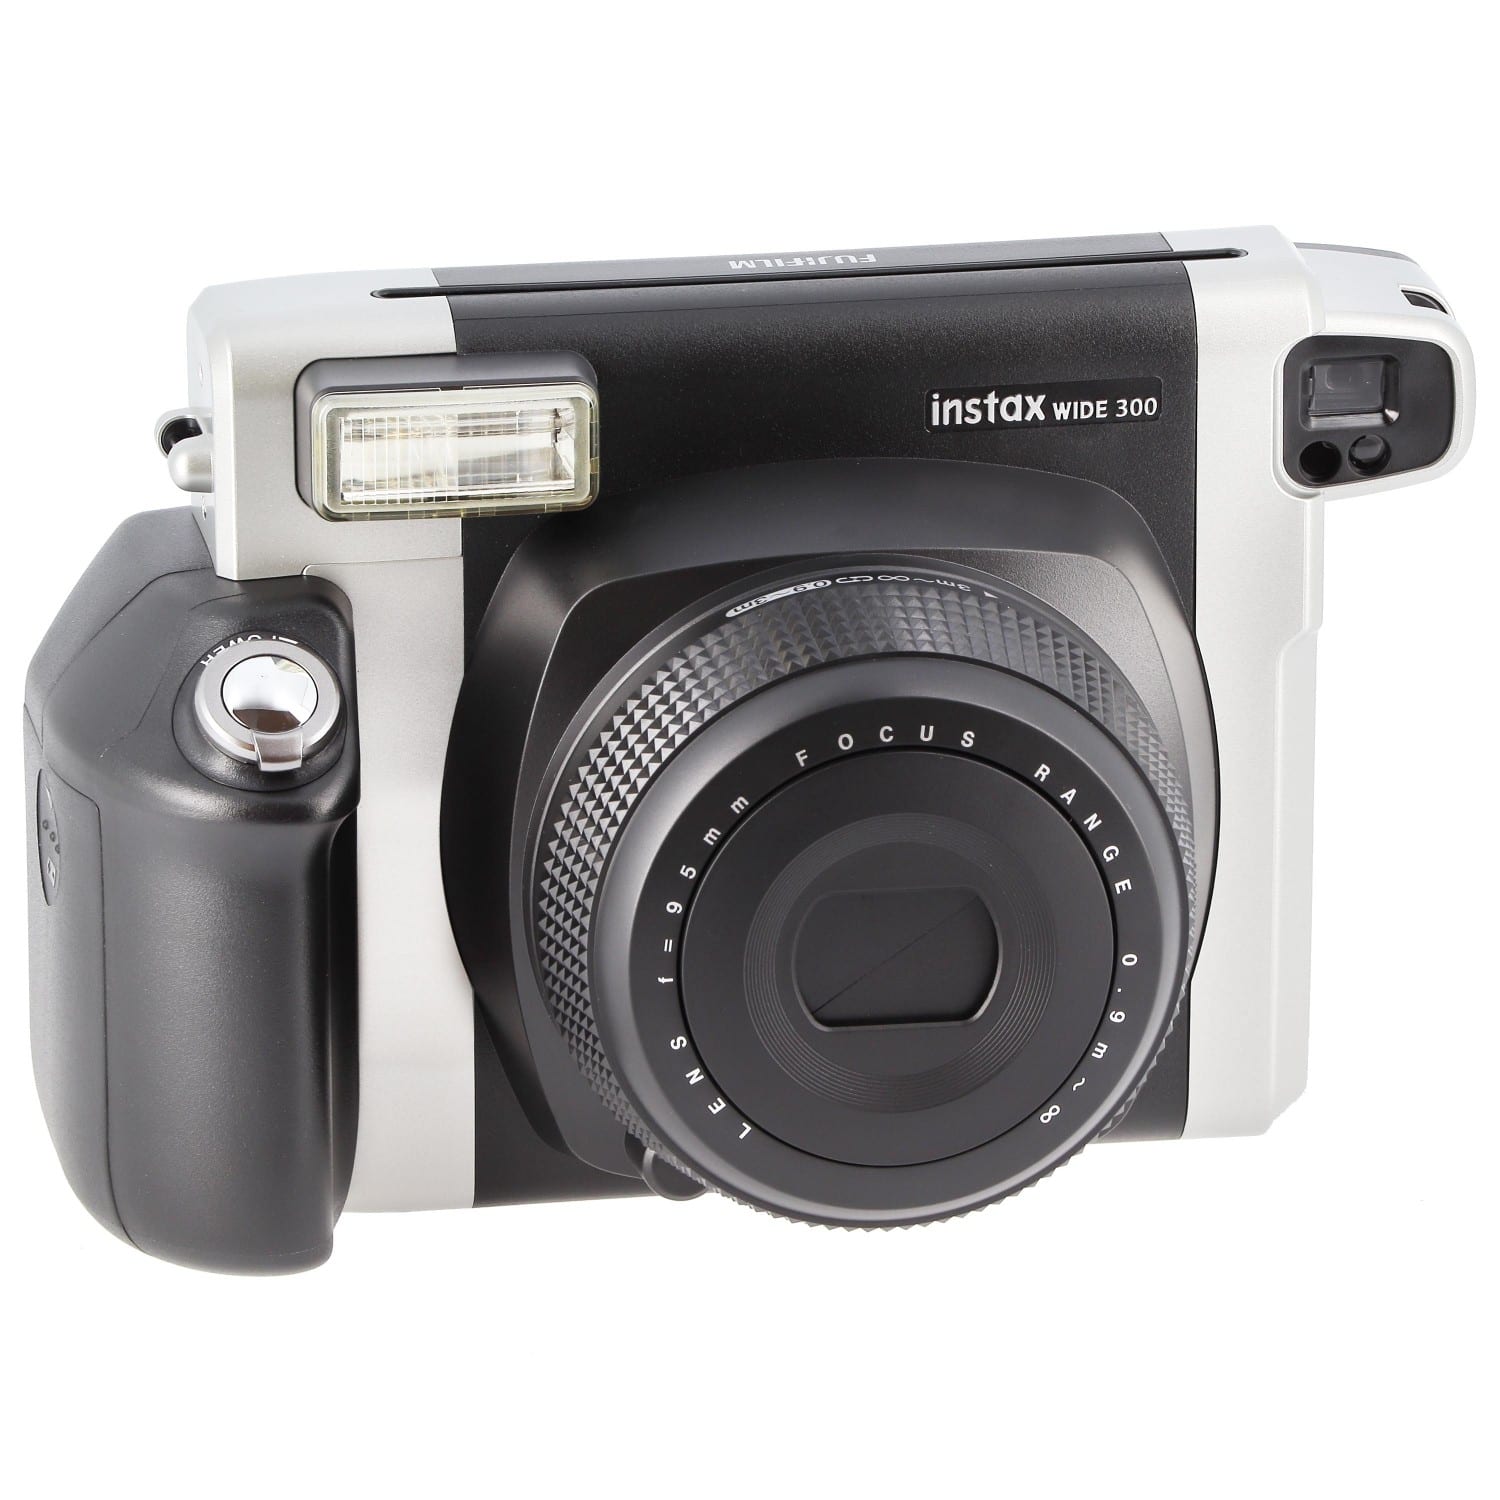 Location Accessoires Appareil Photo Polaroid Instax WIDE 300 - Fujifilm